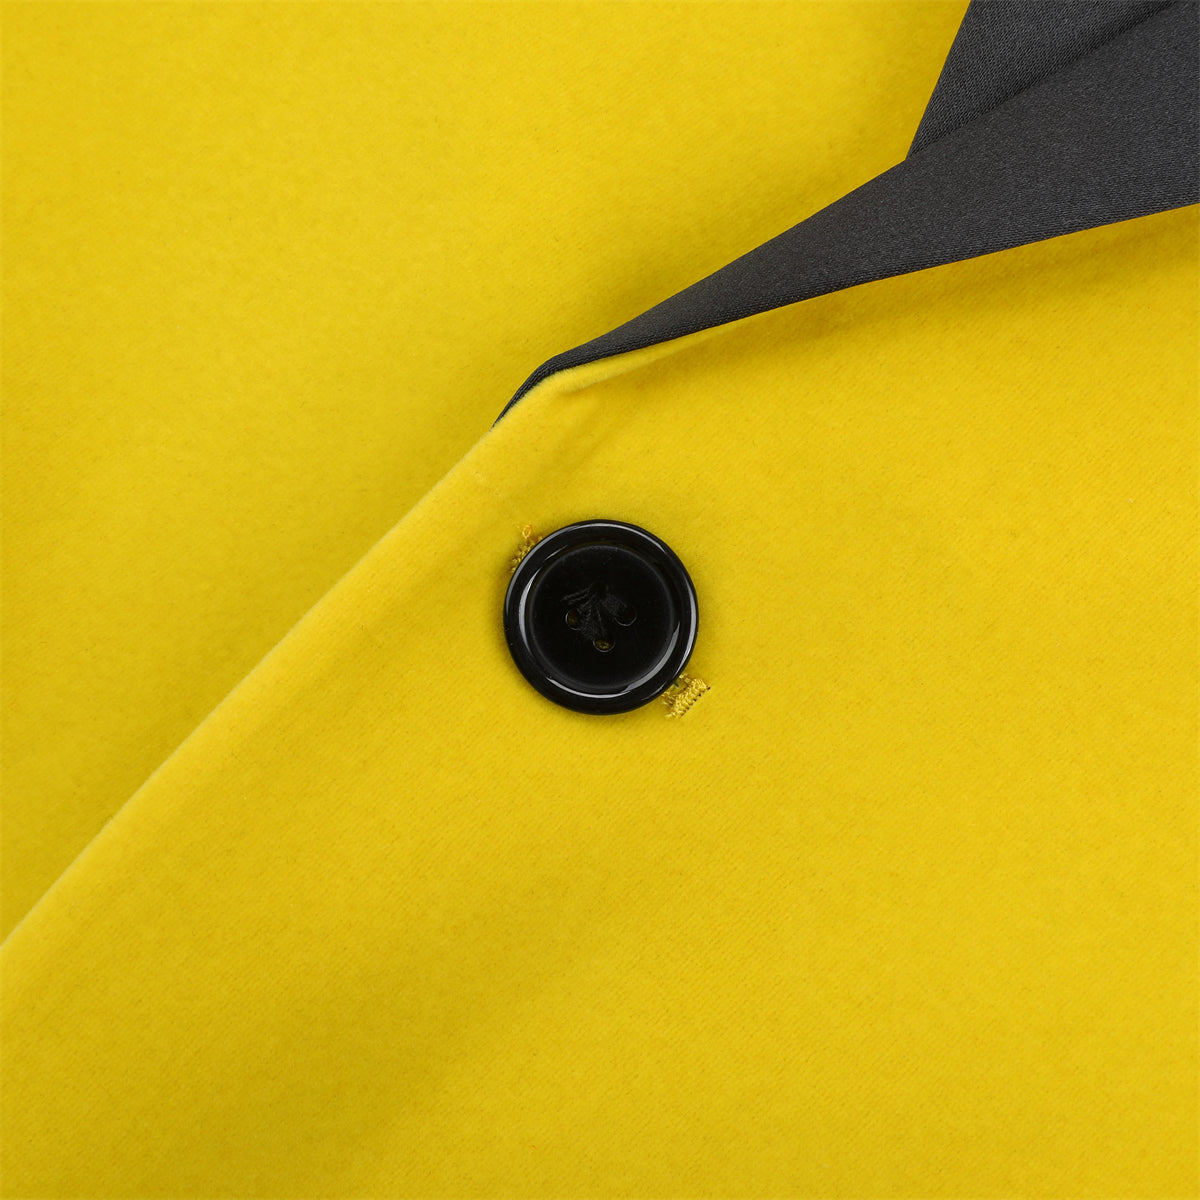 Slim Fit 2-Piece Yellow Pleuche Velvet Tuxedo Suit